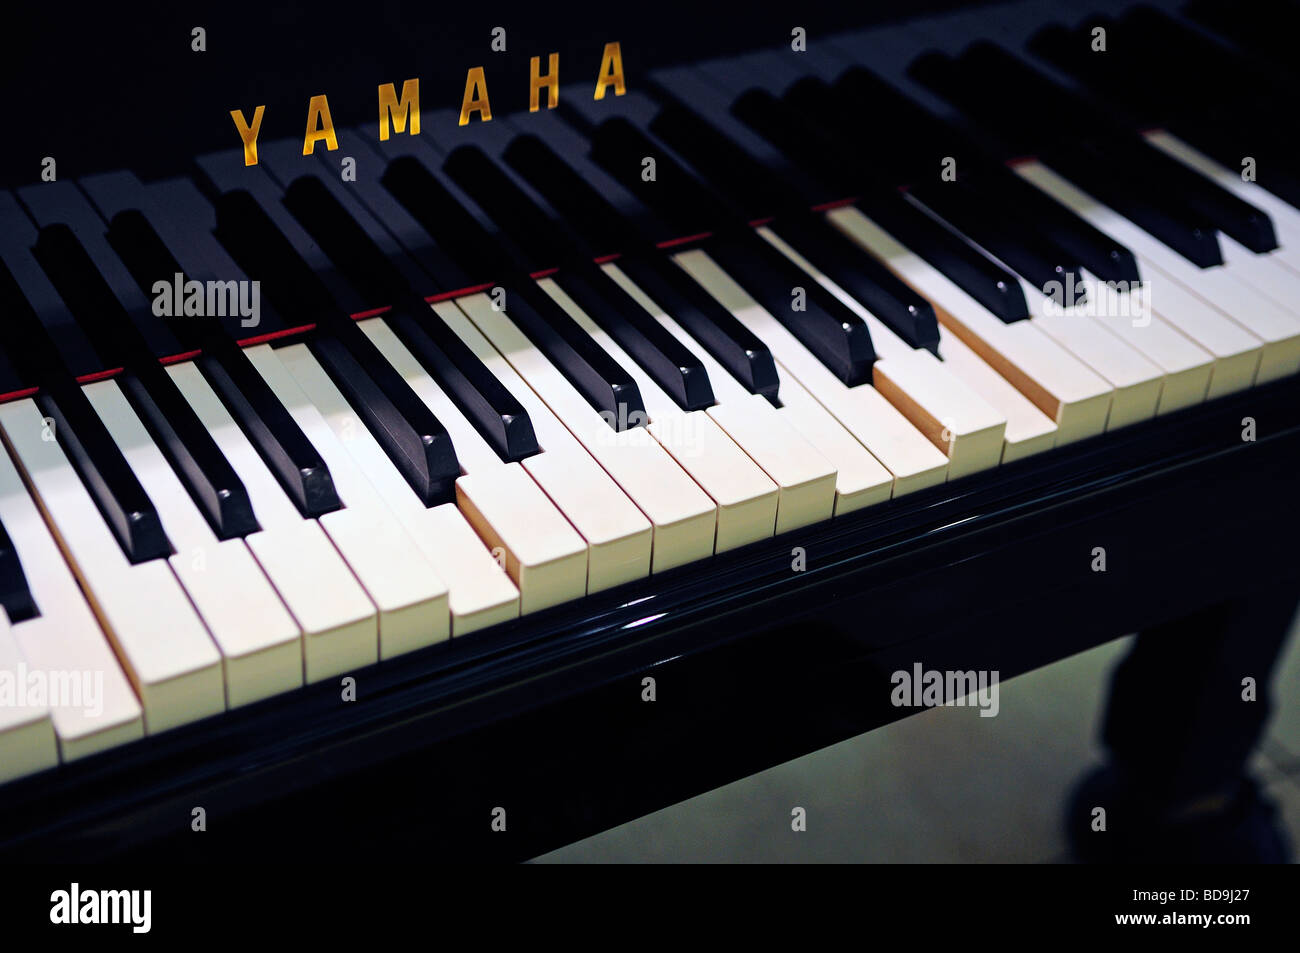 Yamaha pressed piano keyboard Stock Photo